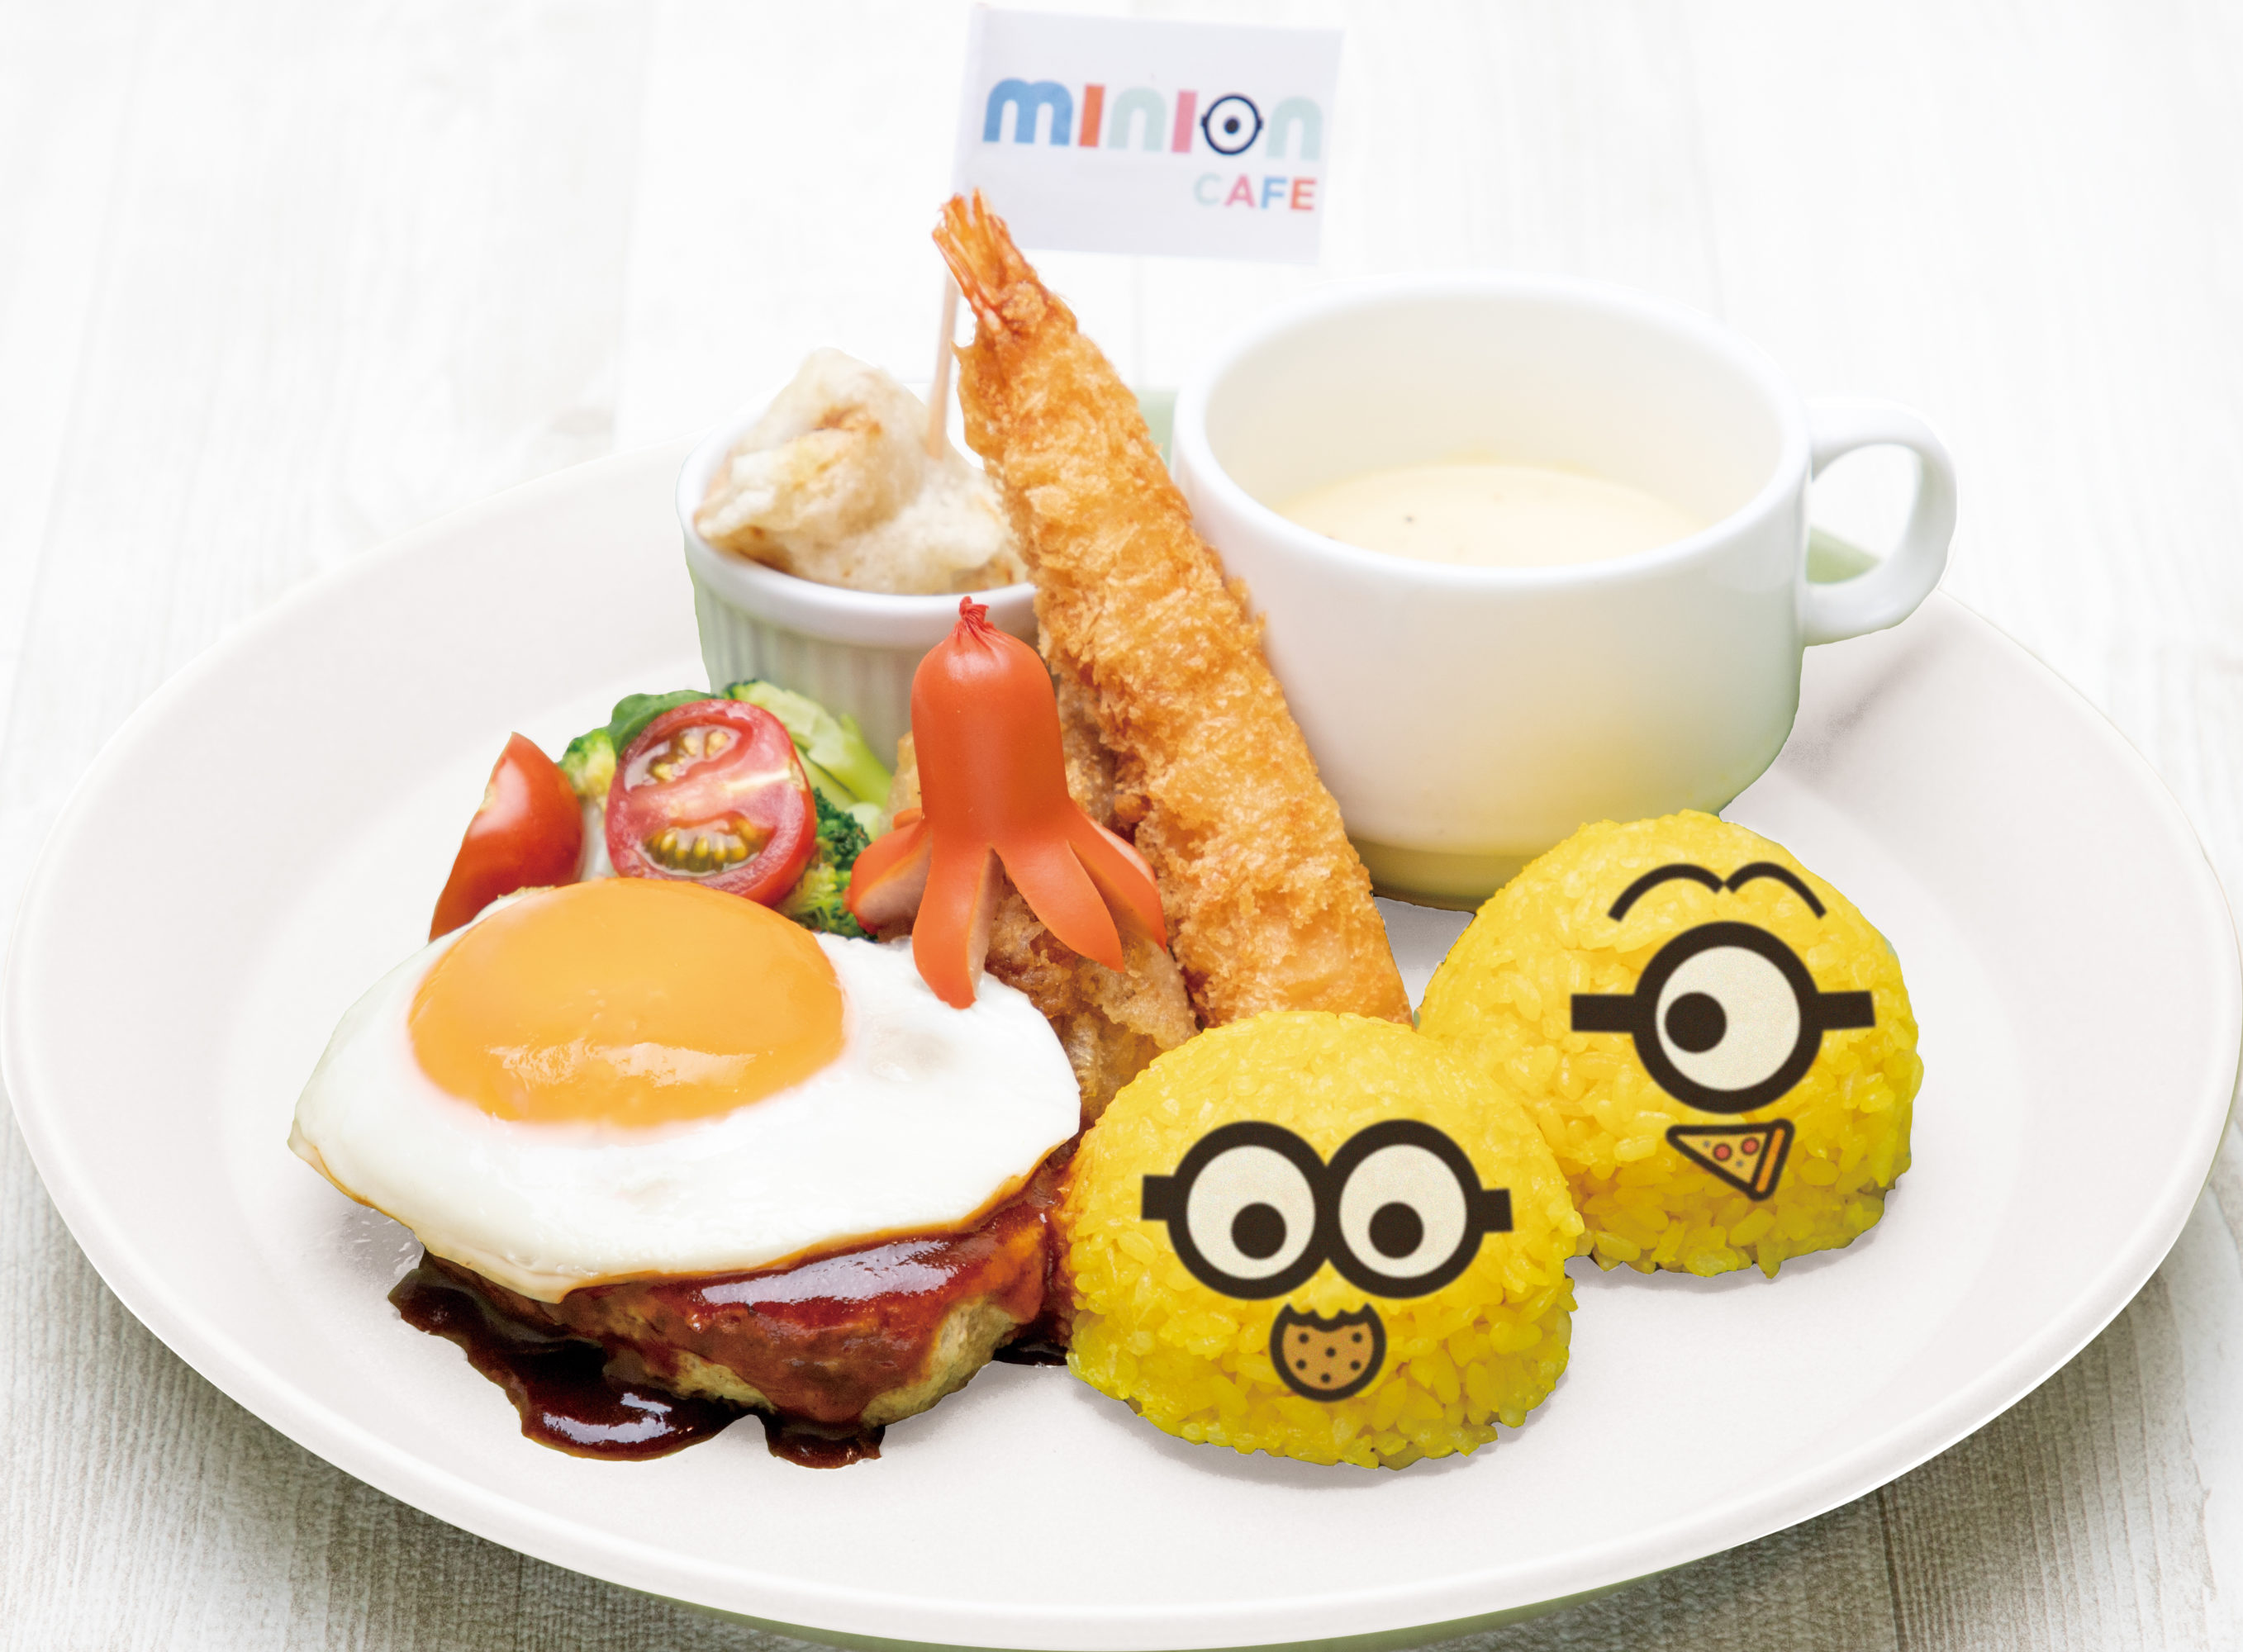 Minion Cafe Singapore